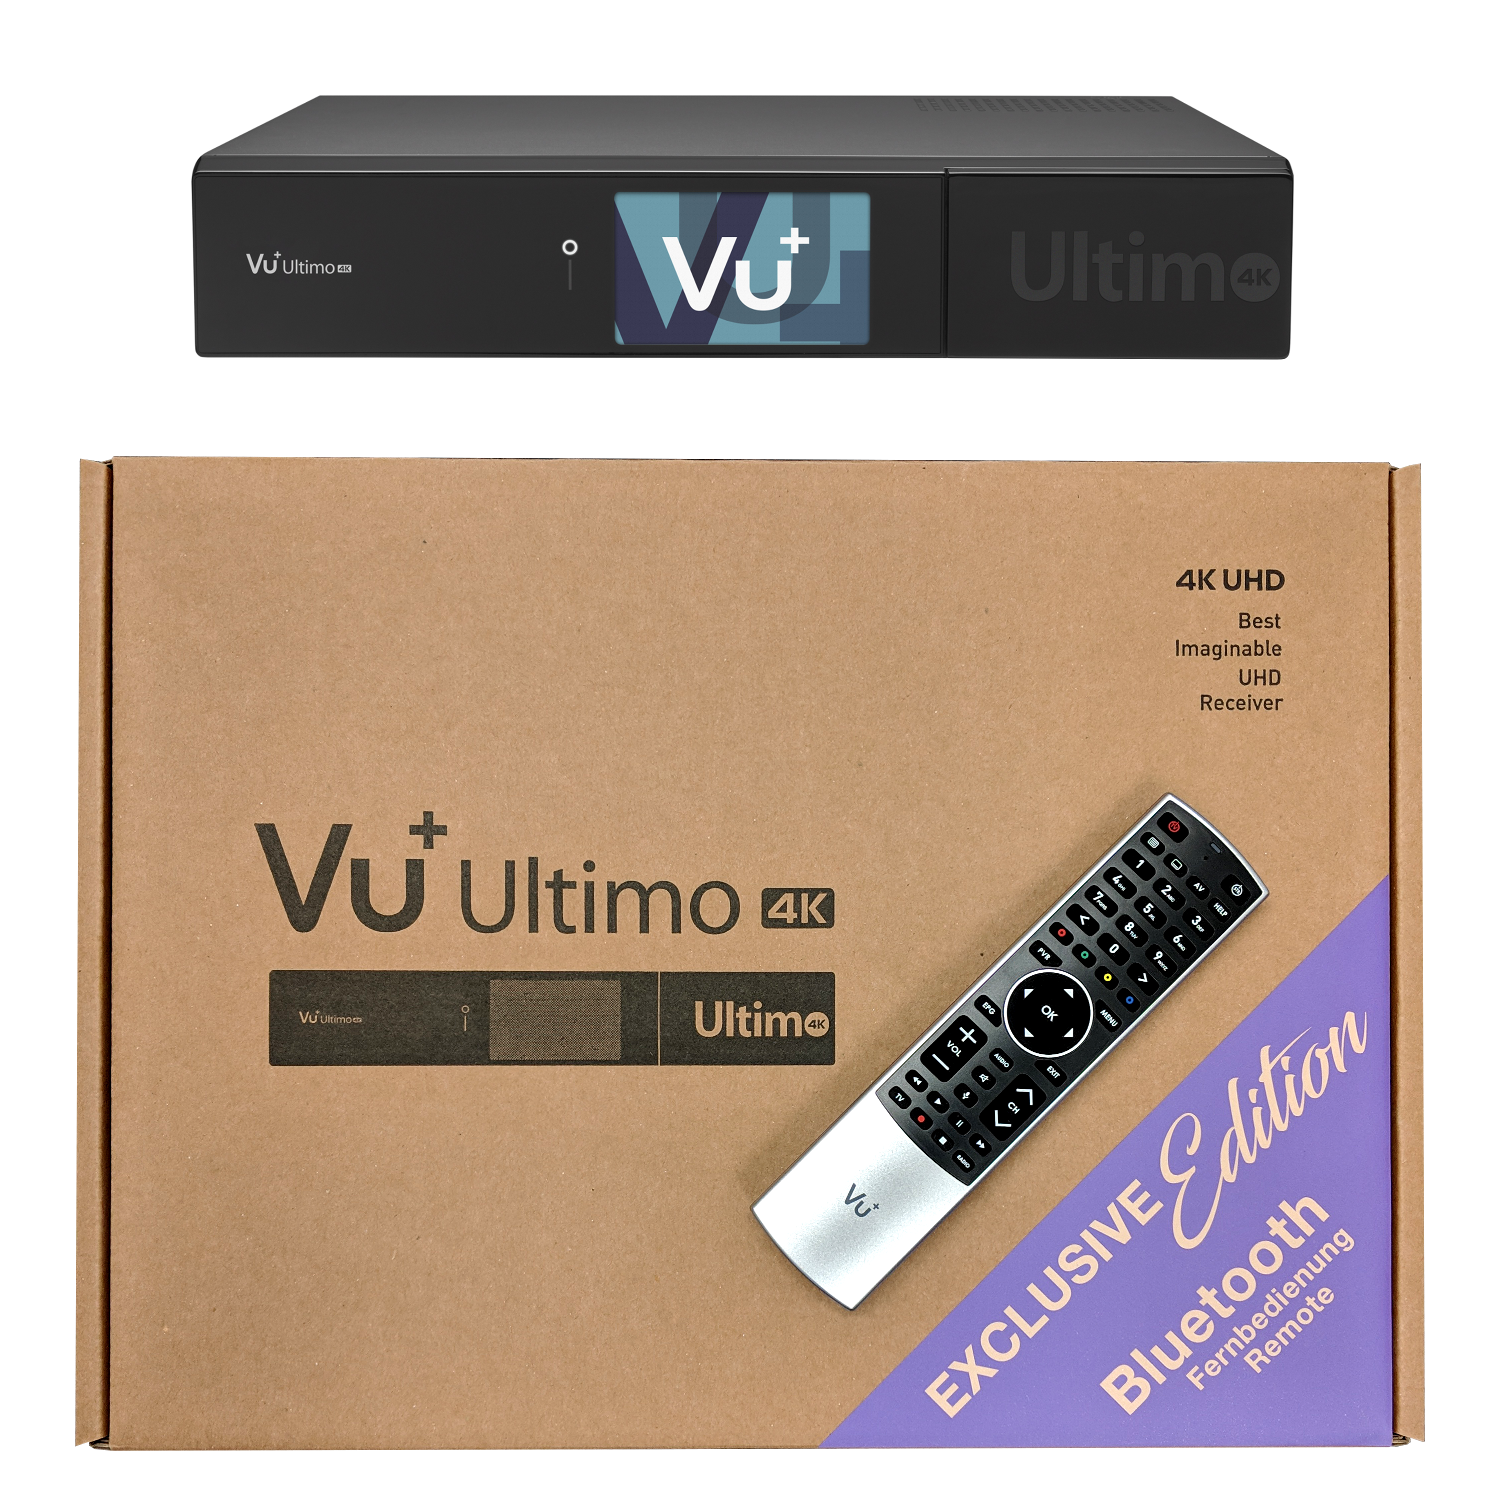 VU+ Ultimo 4K BT Edition 1x DVB-S2X FBC Twin Tuner PVR ready Linux Receiver UHD 2160p